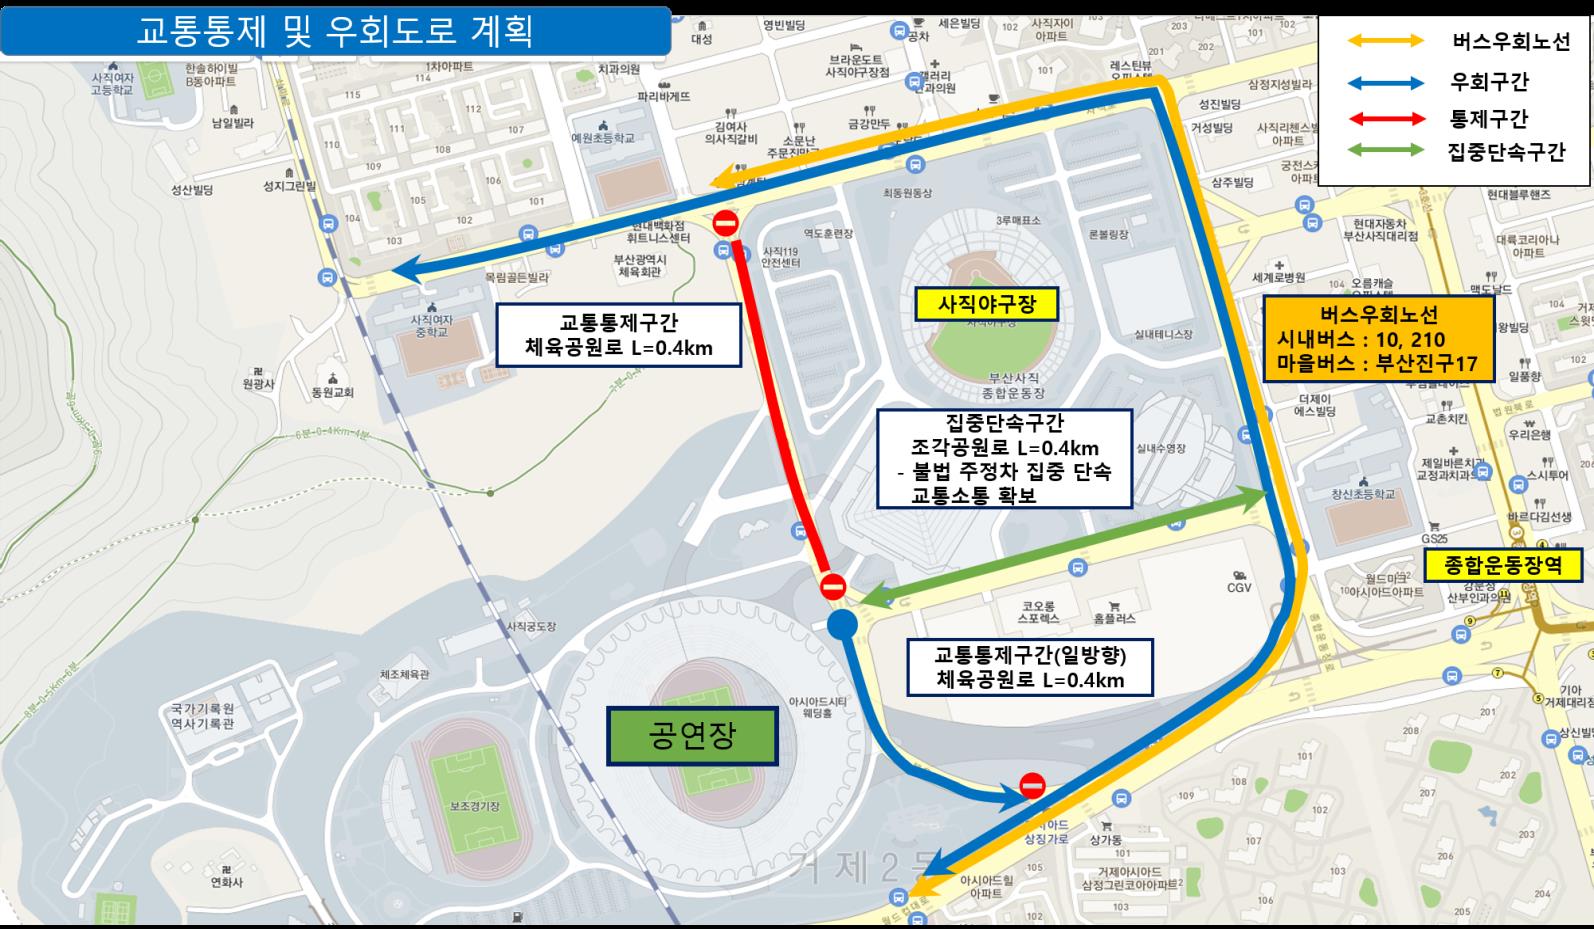 BTS콘서트 대비 교통통제 및 우회도로 계획